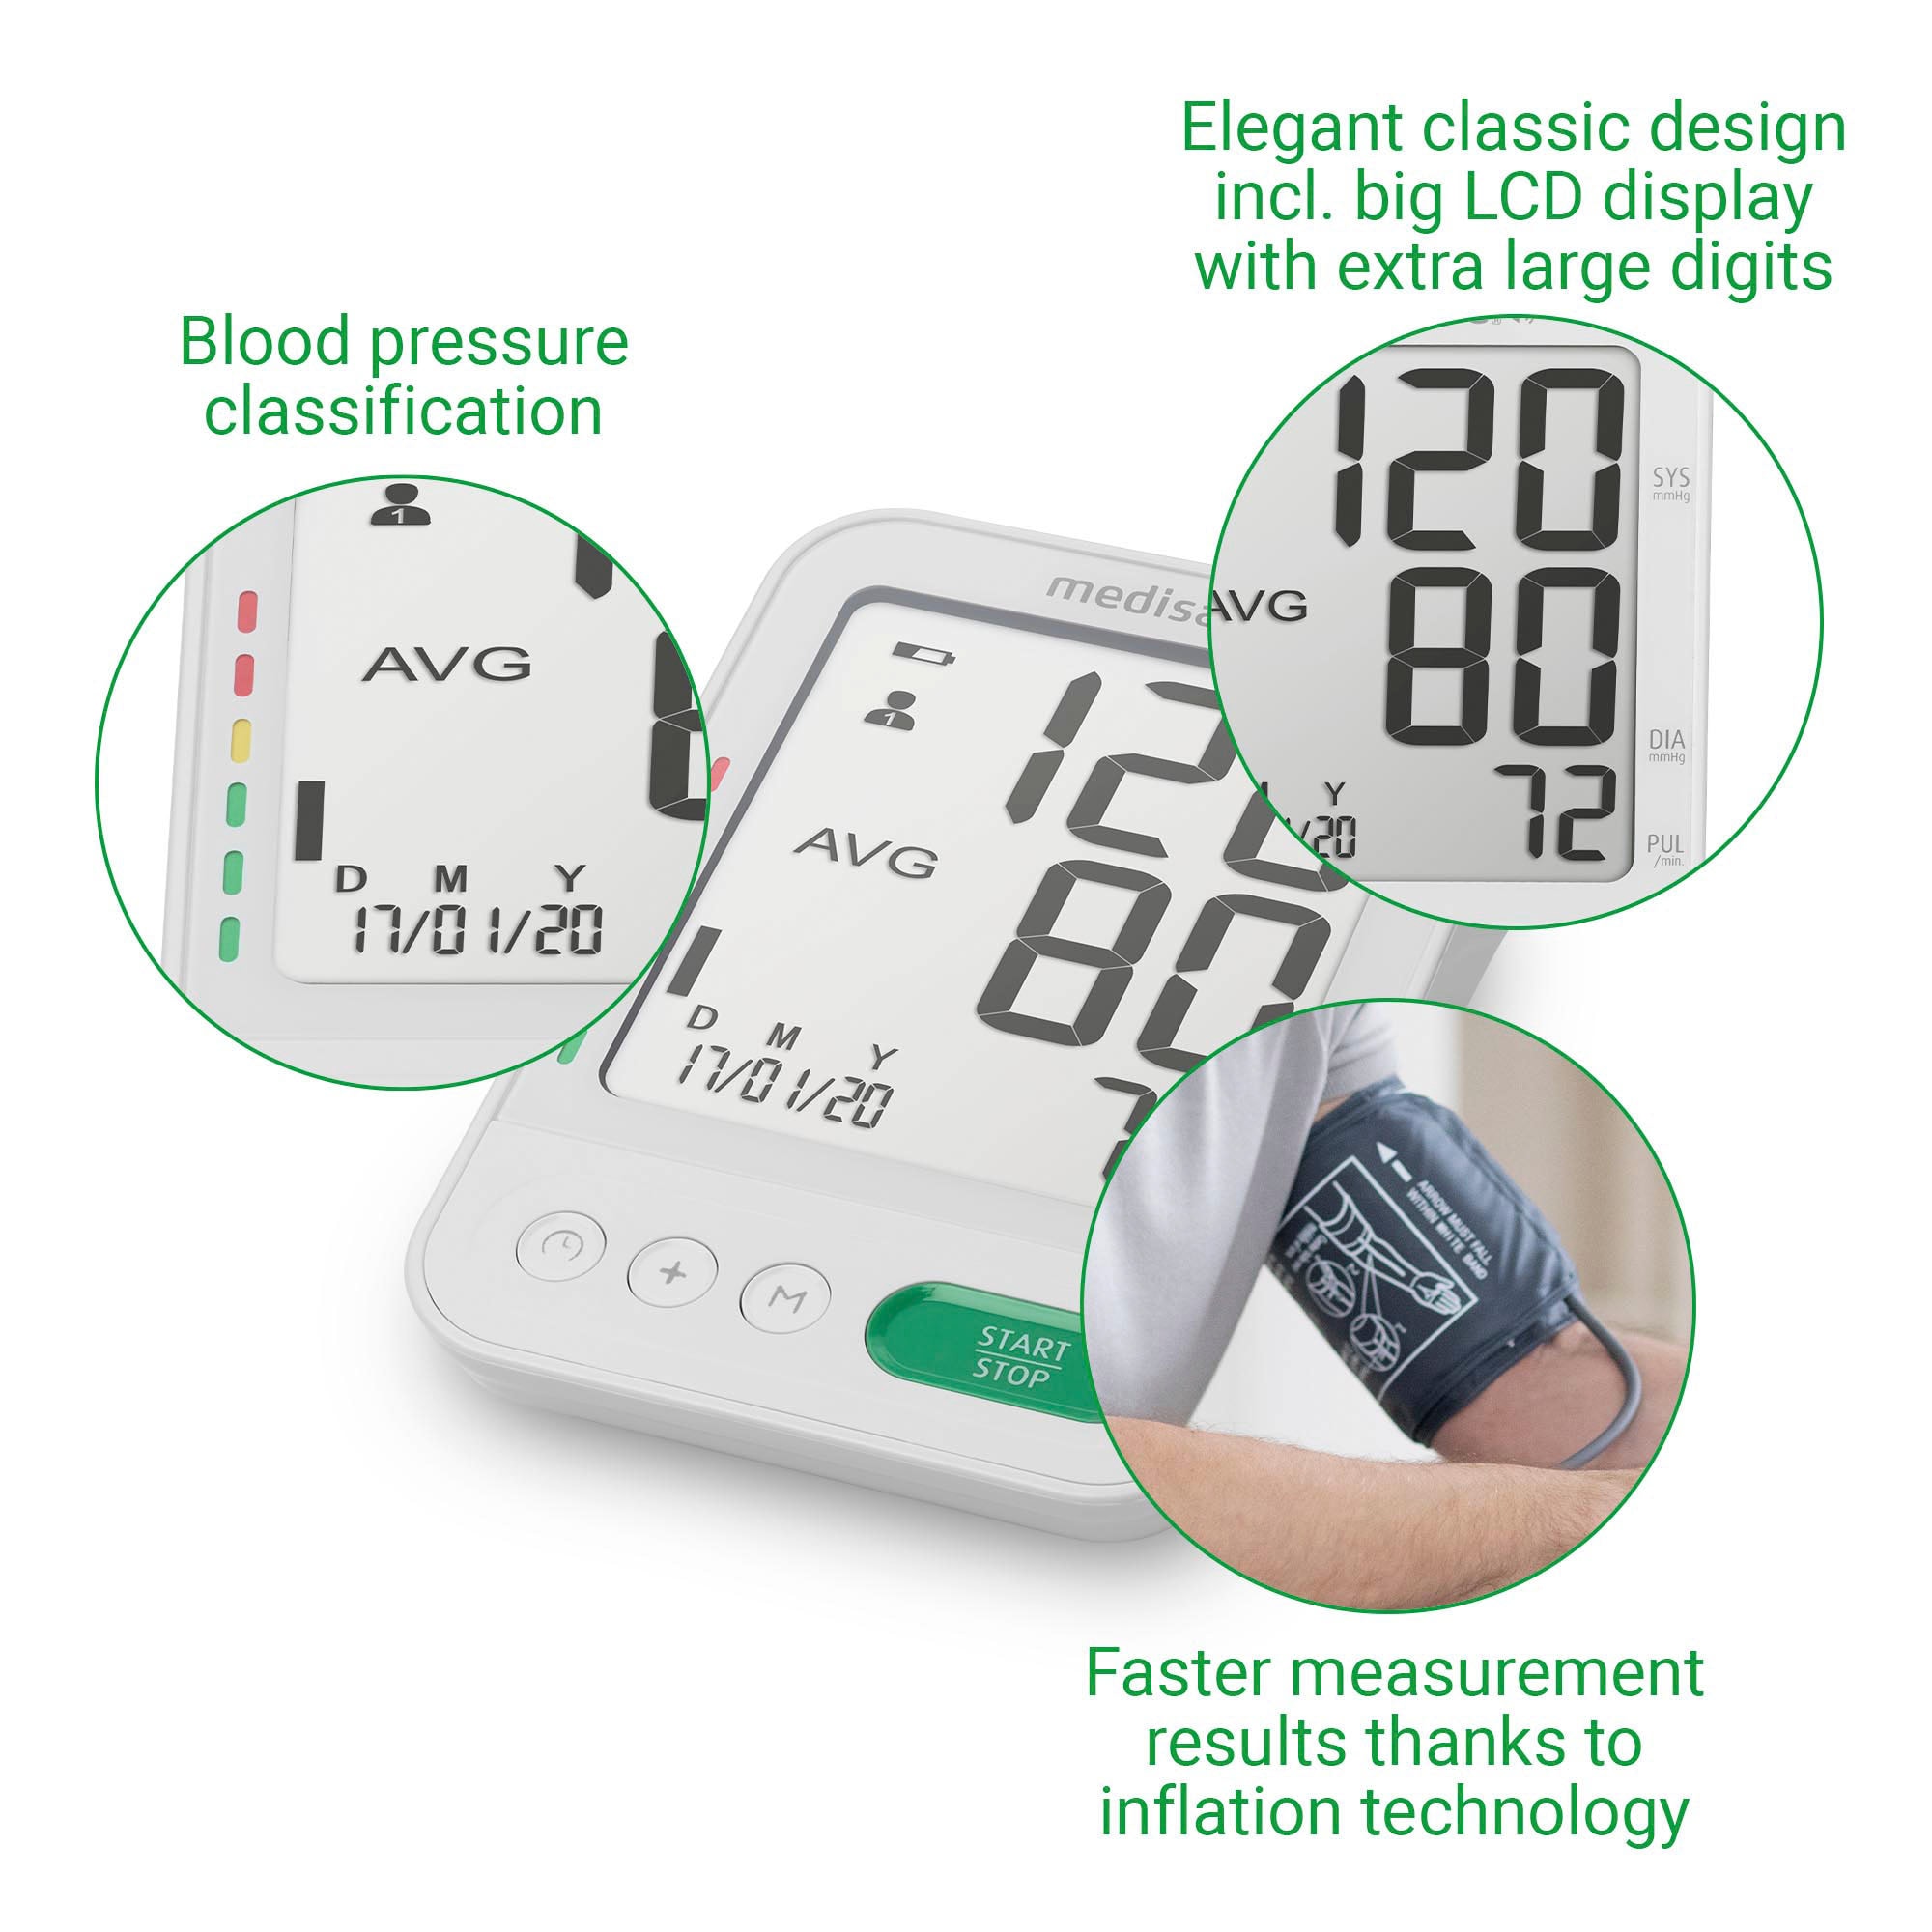 Medisana Oberarm-Blutdruckmessgerät »BU 586«